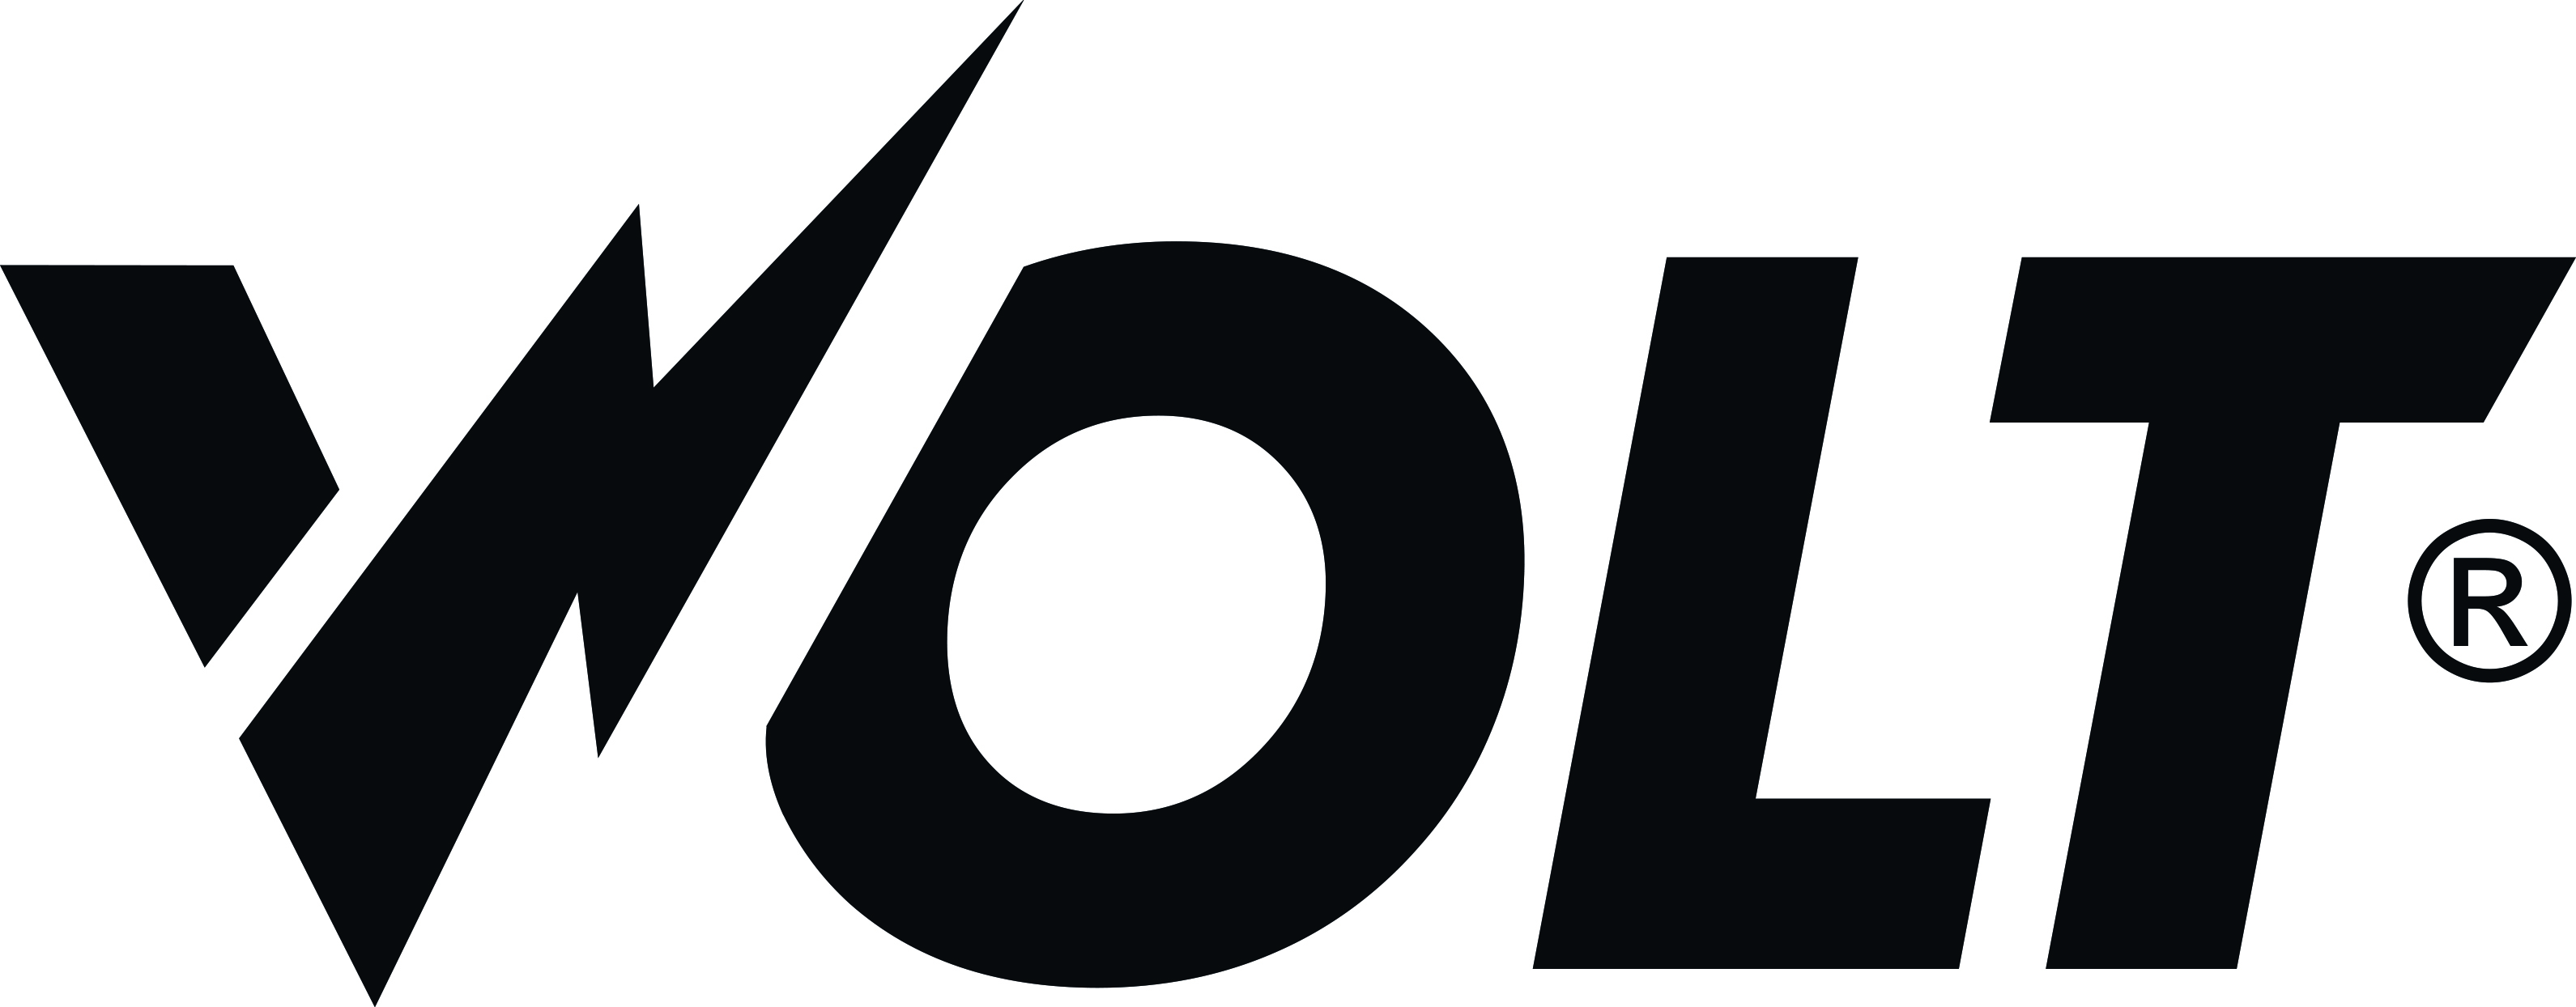 Www volts. Вольт логотип. Вольт надпись. Вольт логотип Volts. 220 Volt ембелмы.